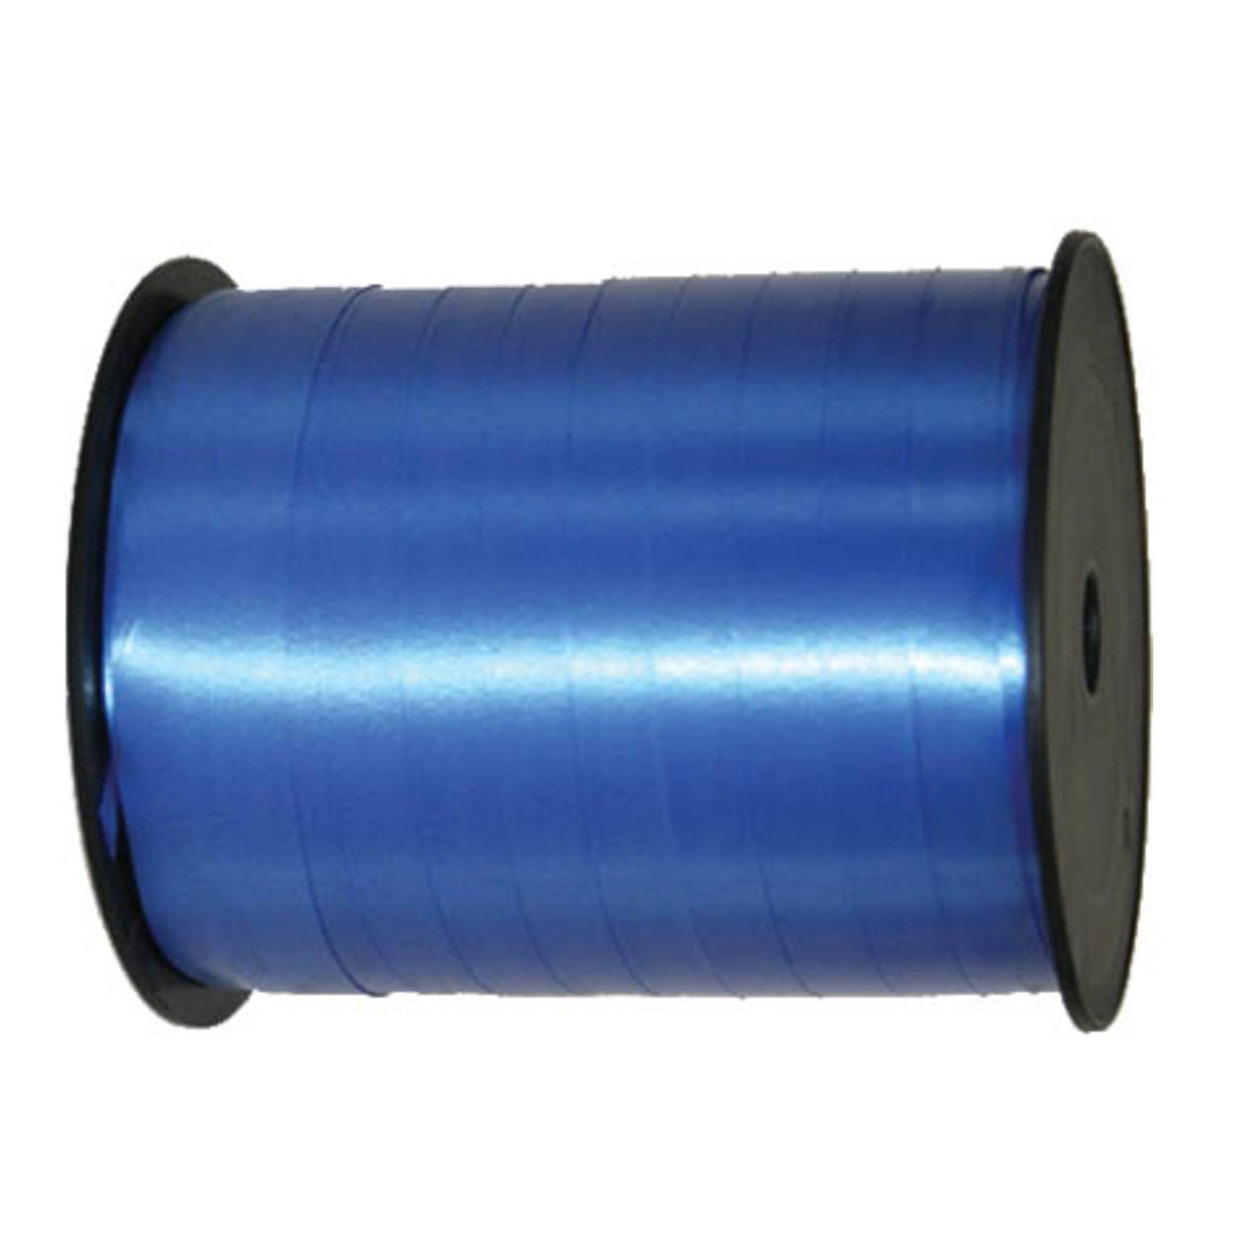 Cadeaulint/sierlint in de kleur blauw 5 mm x 500 meter